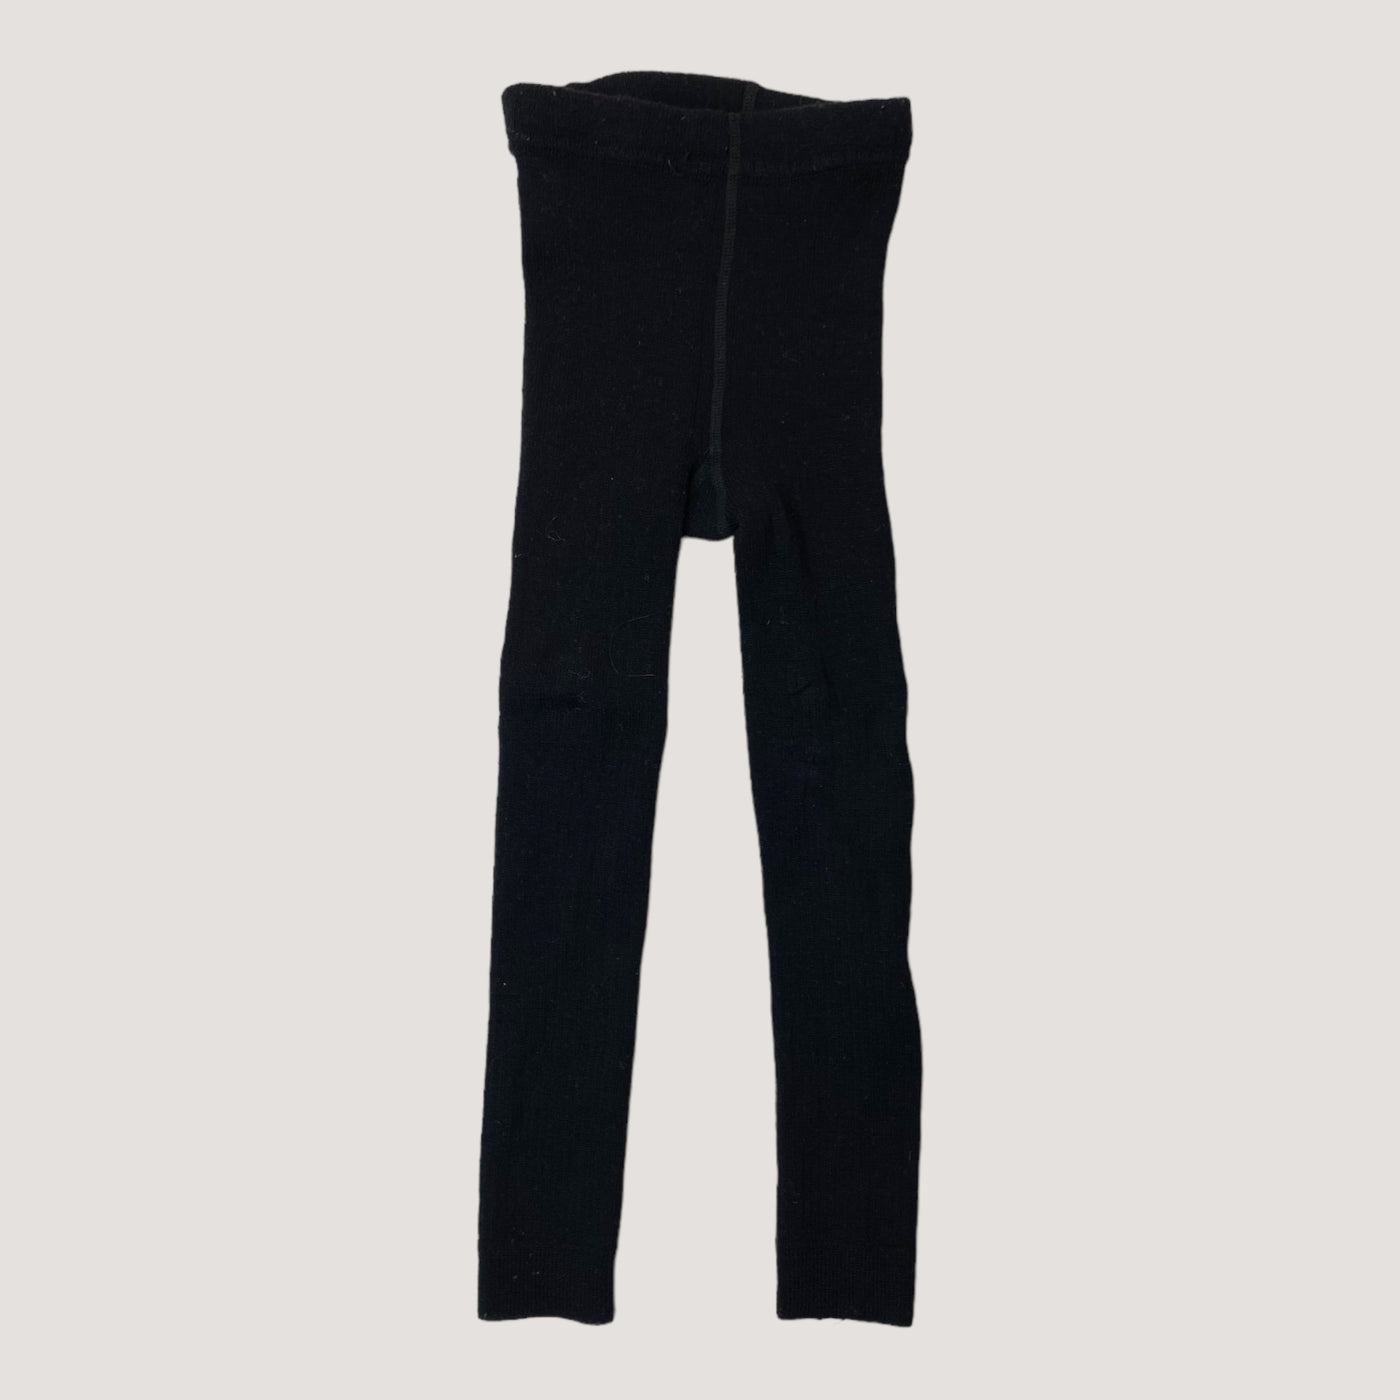 Metsola wool mix leggings, black | 110cm